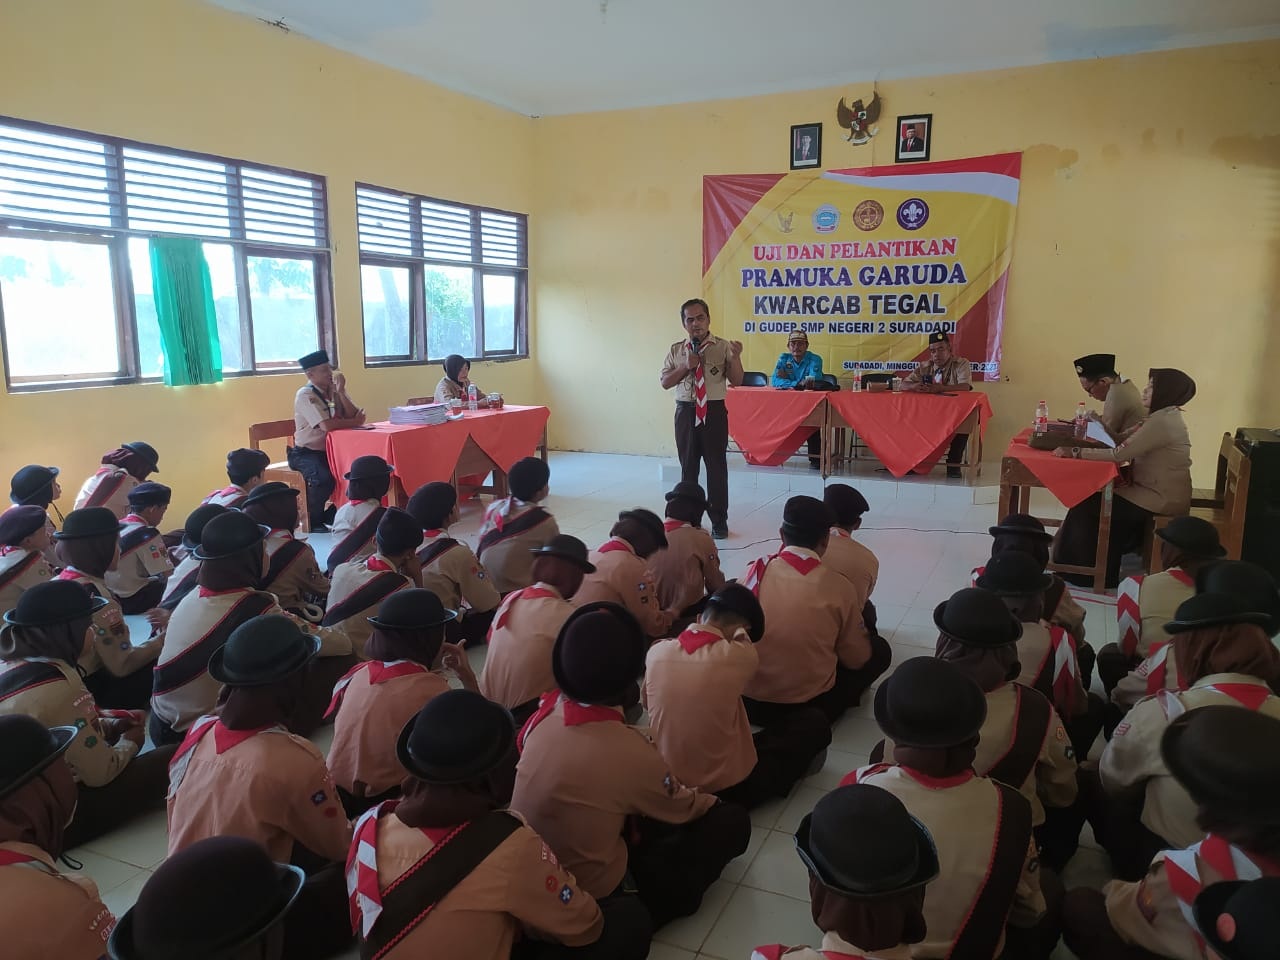 Gudep SMP Negeri 2 Suradadi Kabupaten Tegal Adakan Pramuka Garuda 